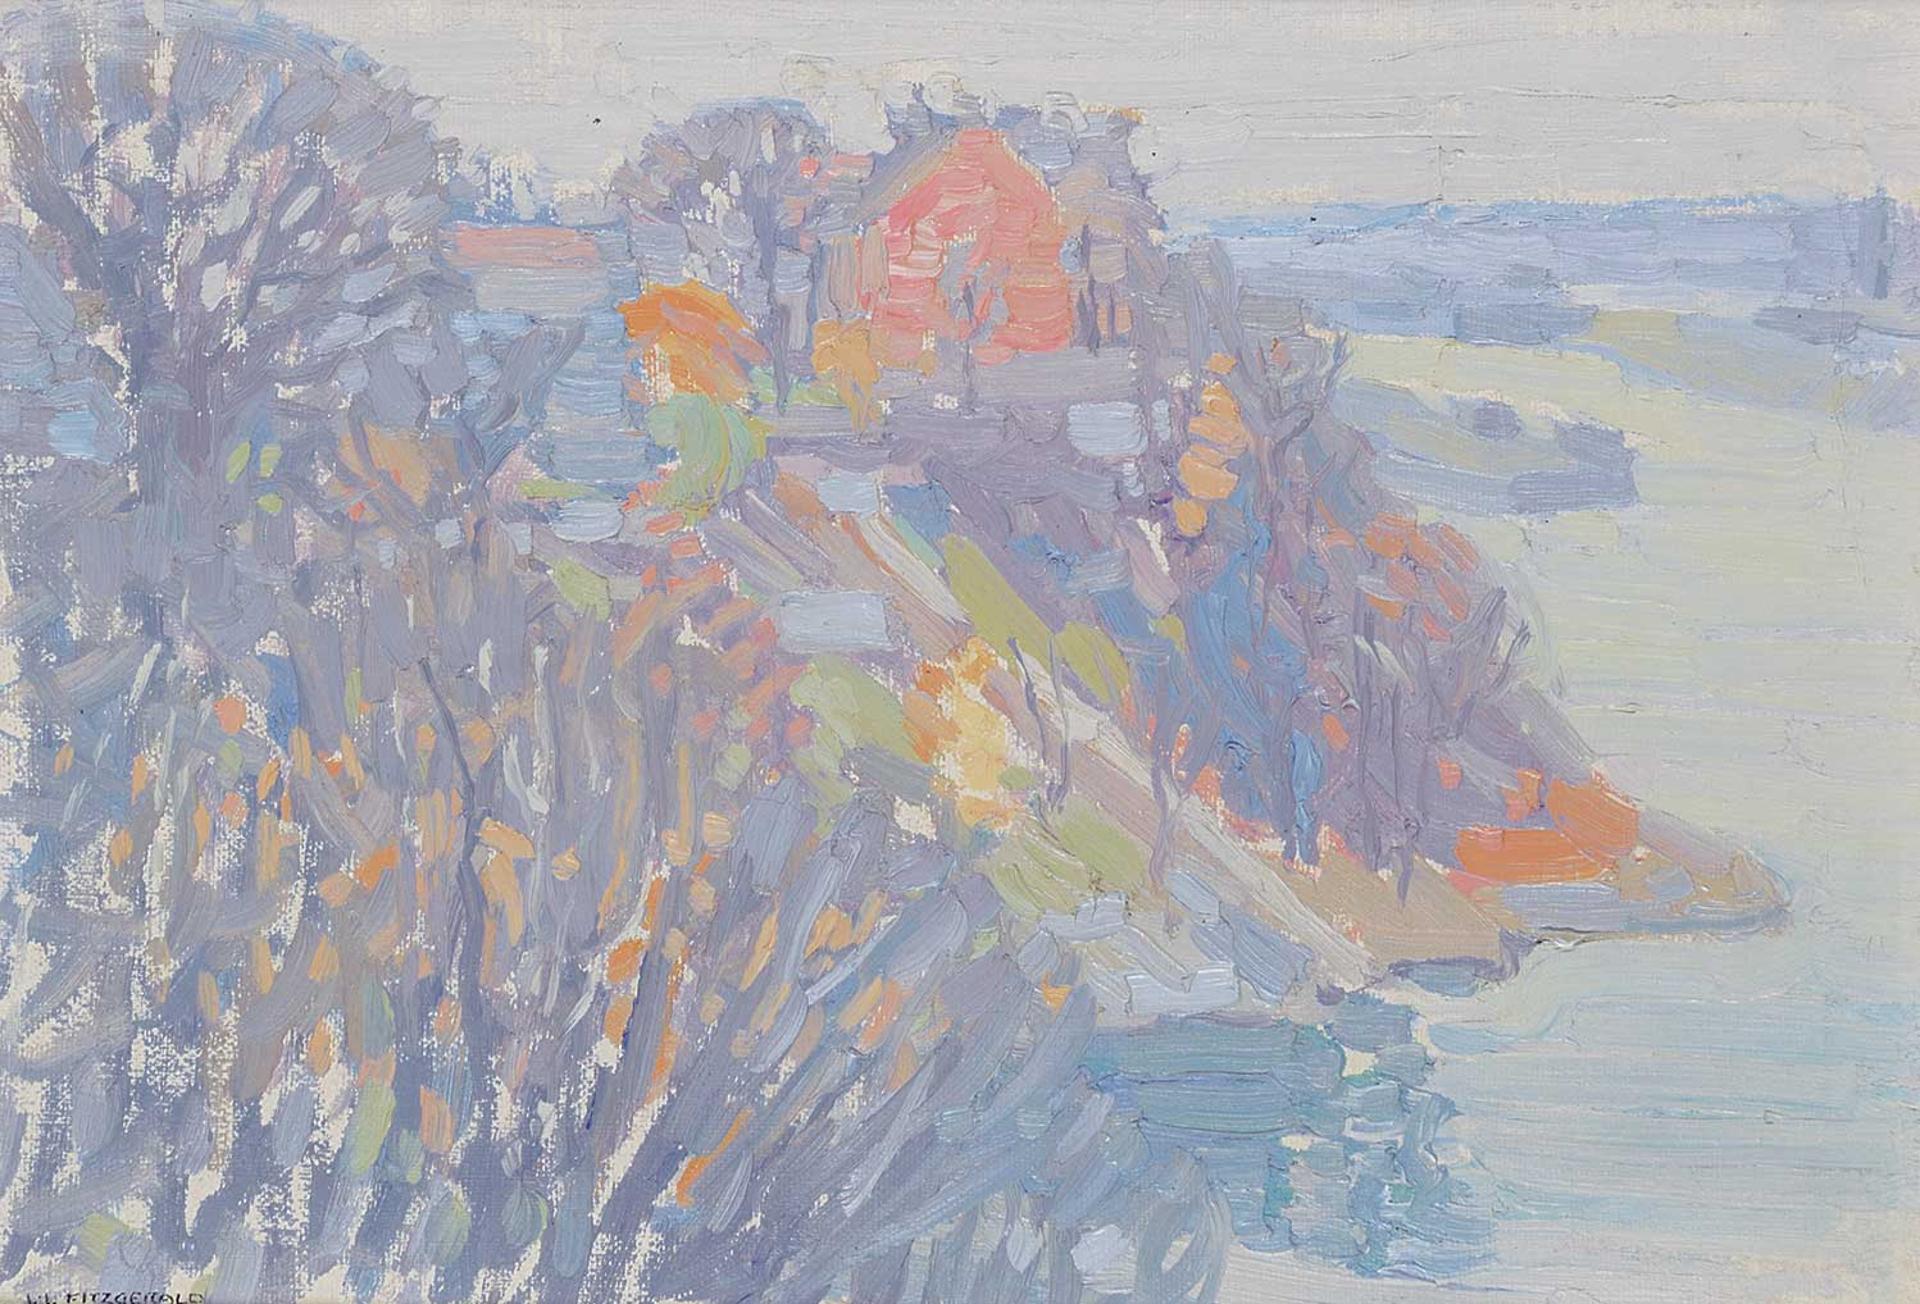 Lionel Lemoine FitzGerald (1890-1956) - Landscape with River